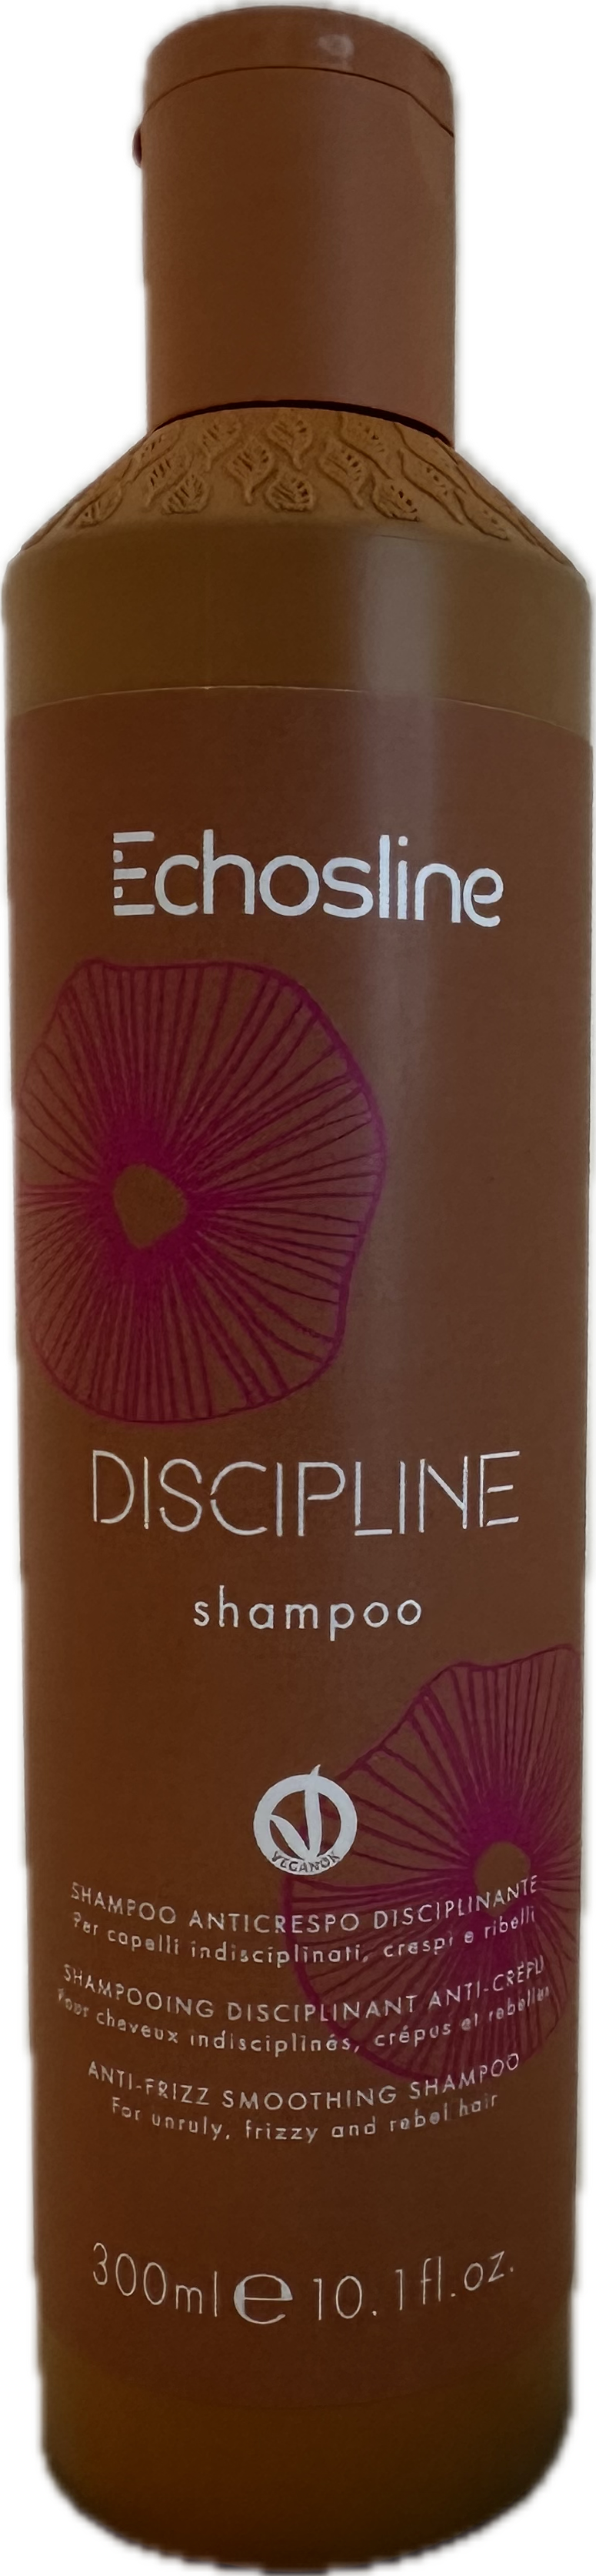 Echosline  Discipline Shampoo 300ml